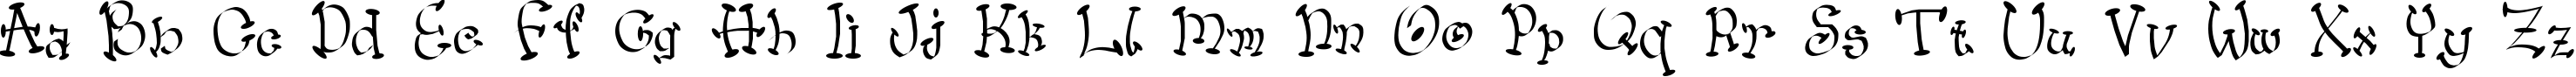 Пример написания английского алфавита шрифтом Wacko